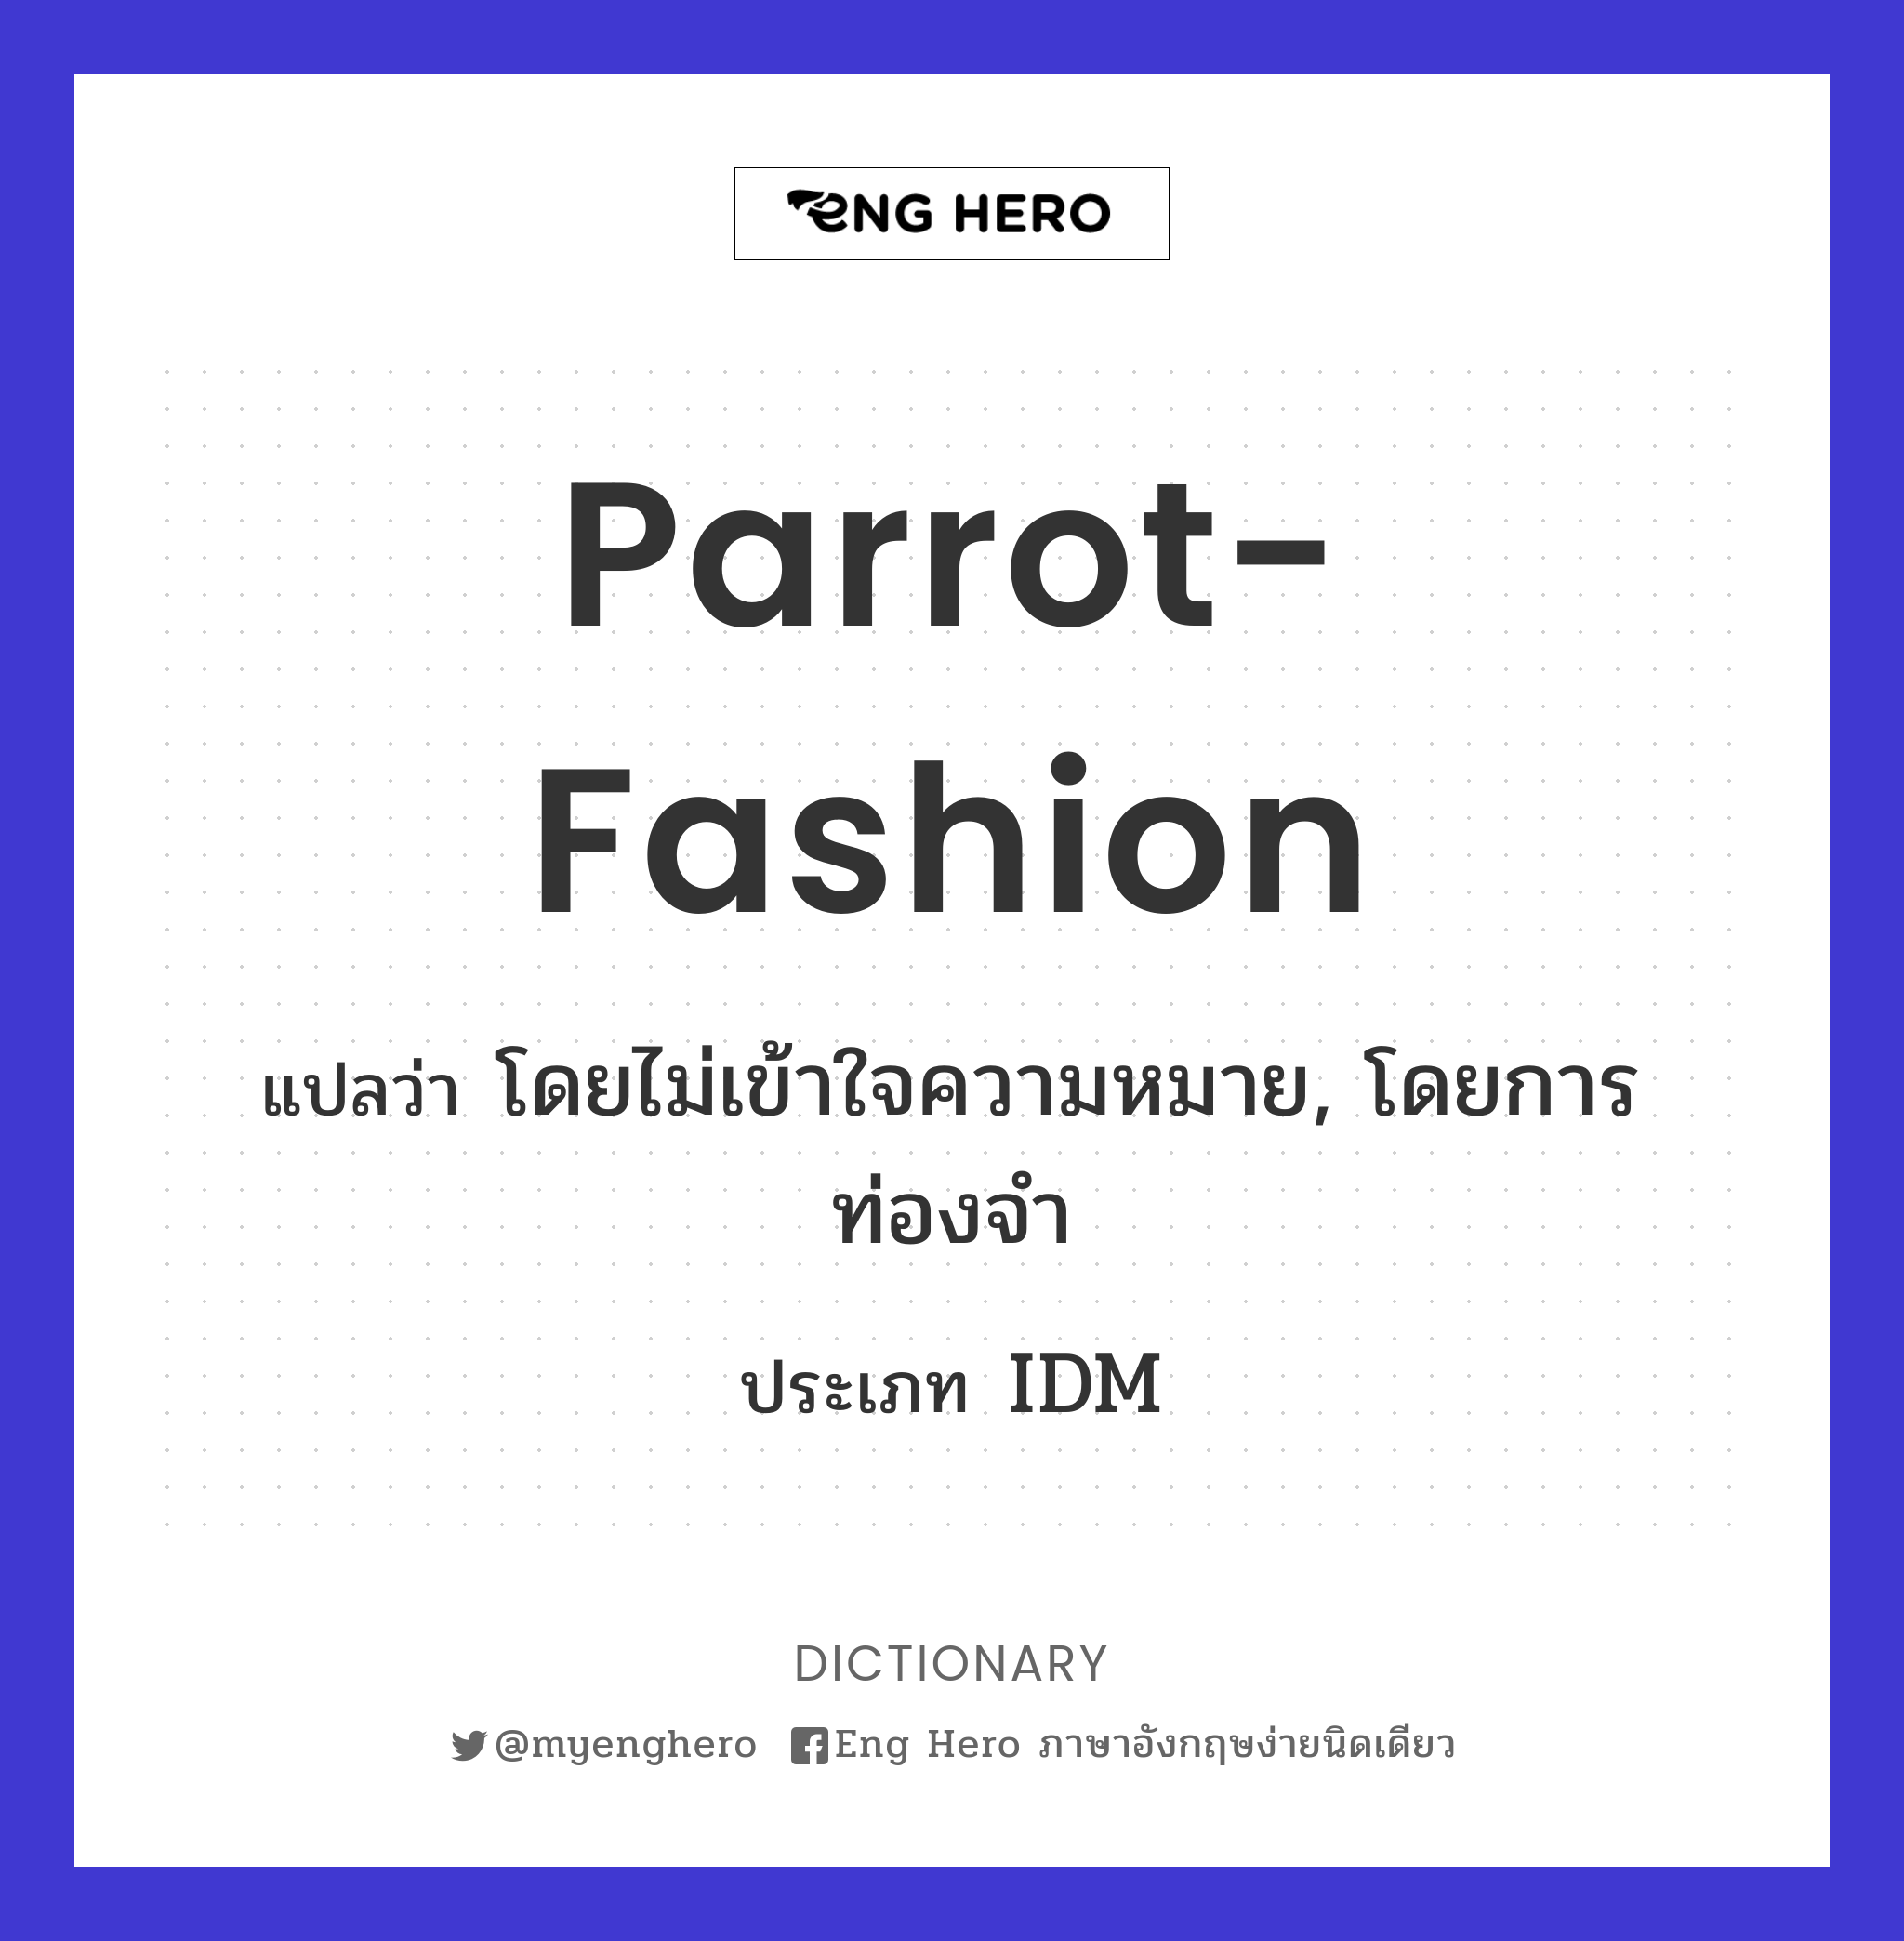 parrot-fashion